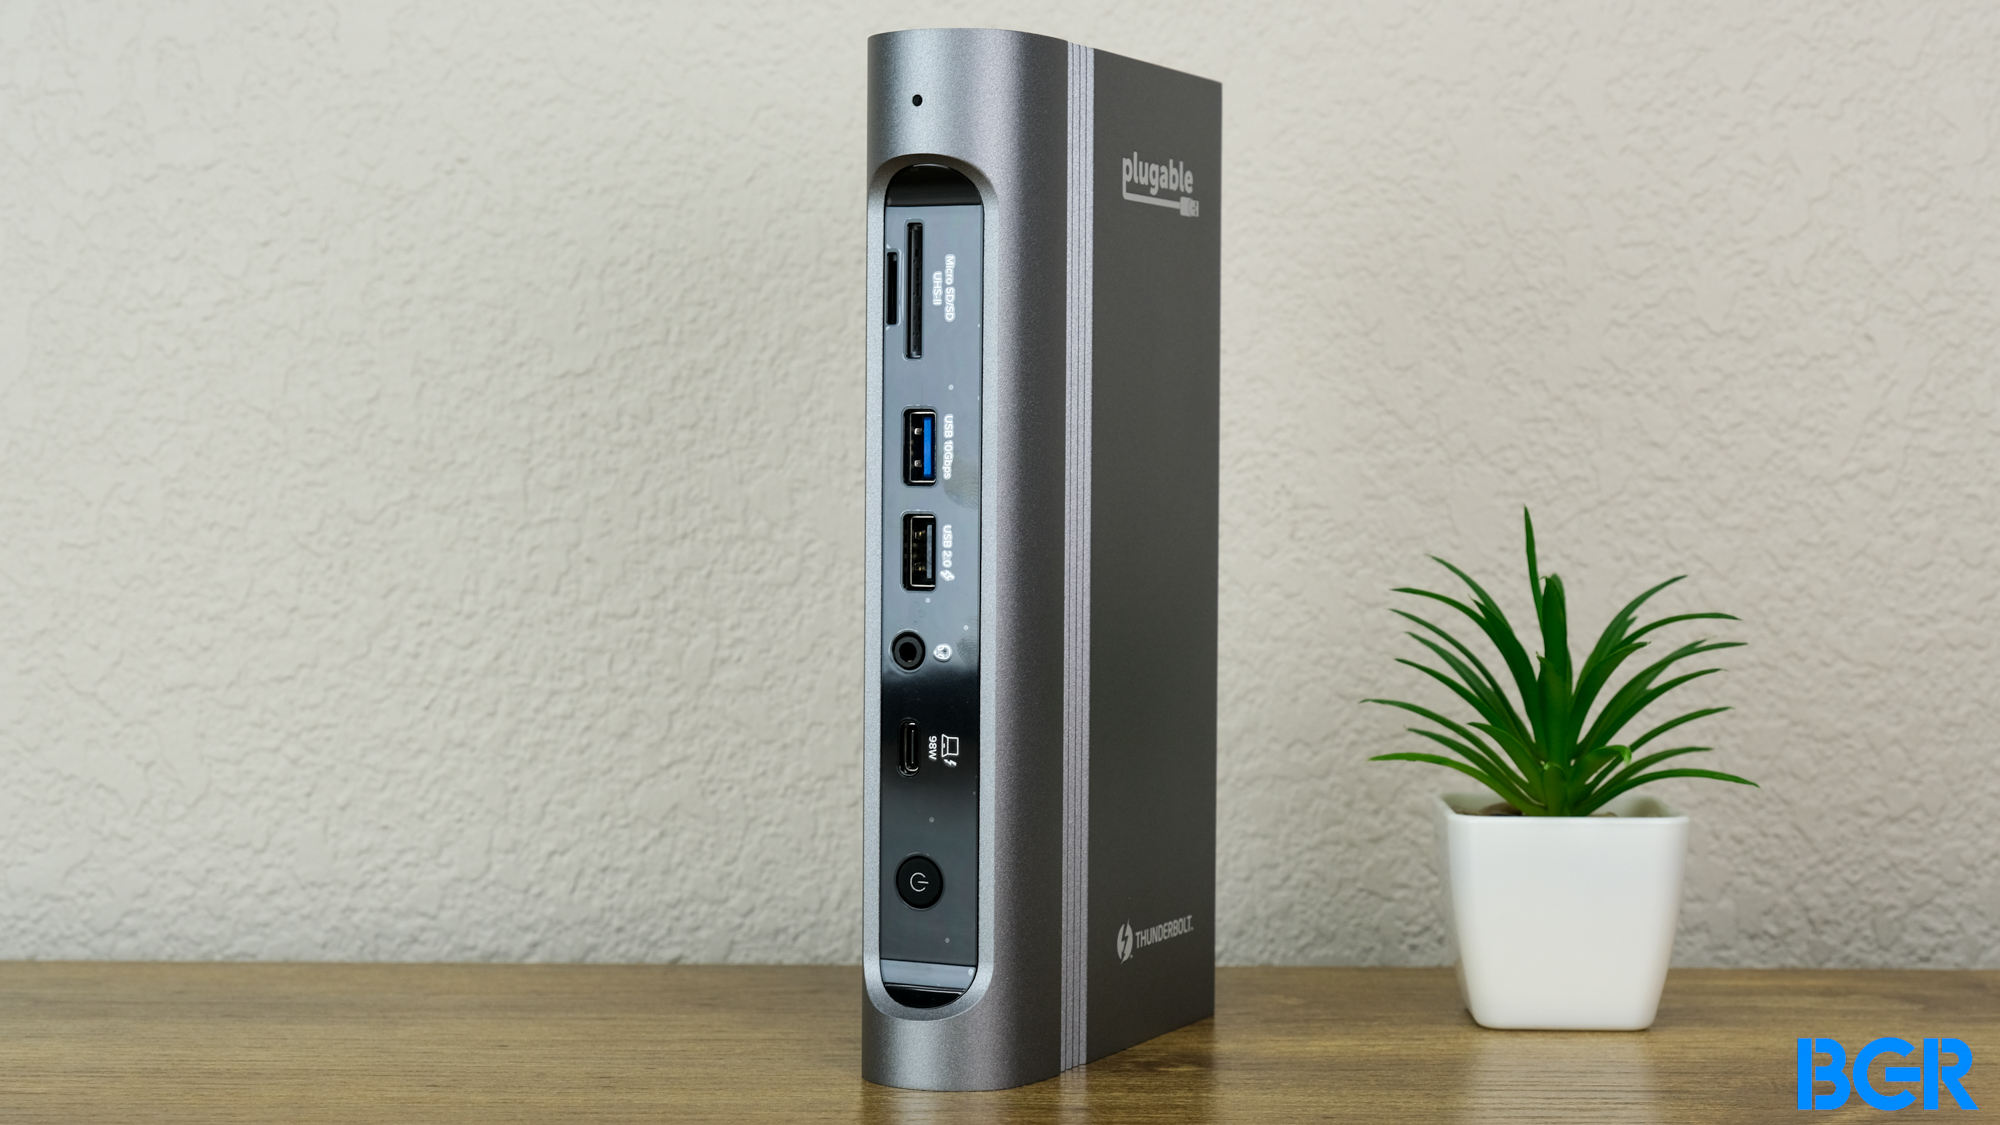 Plugable Thunderbolt 4 and USB4 Hub Review 